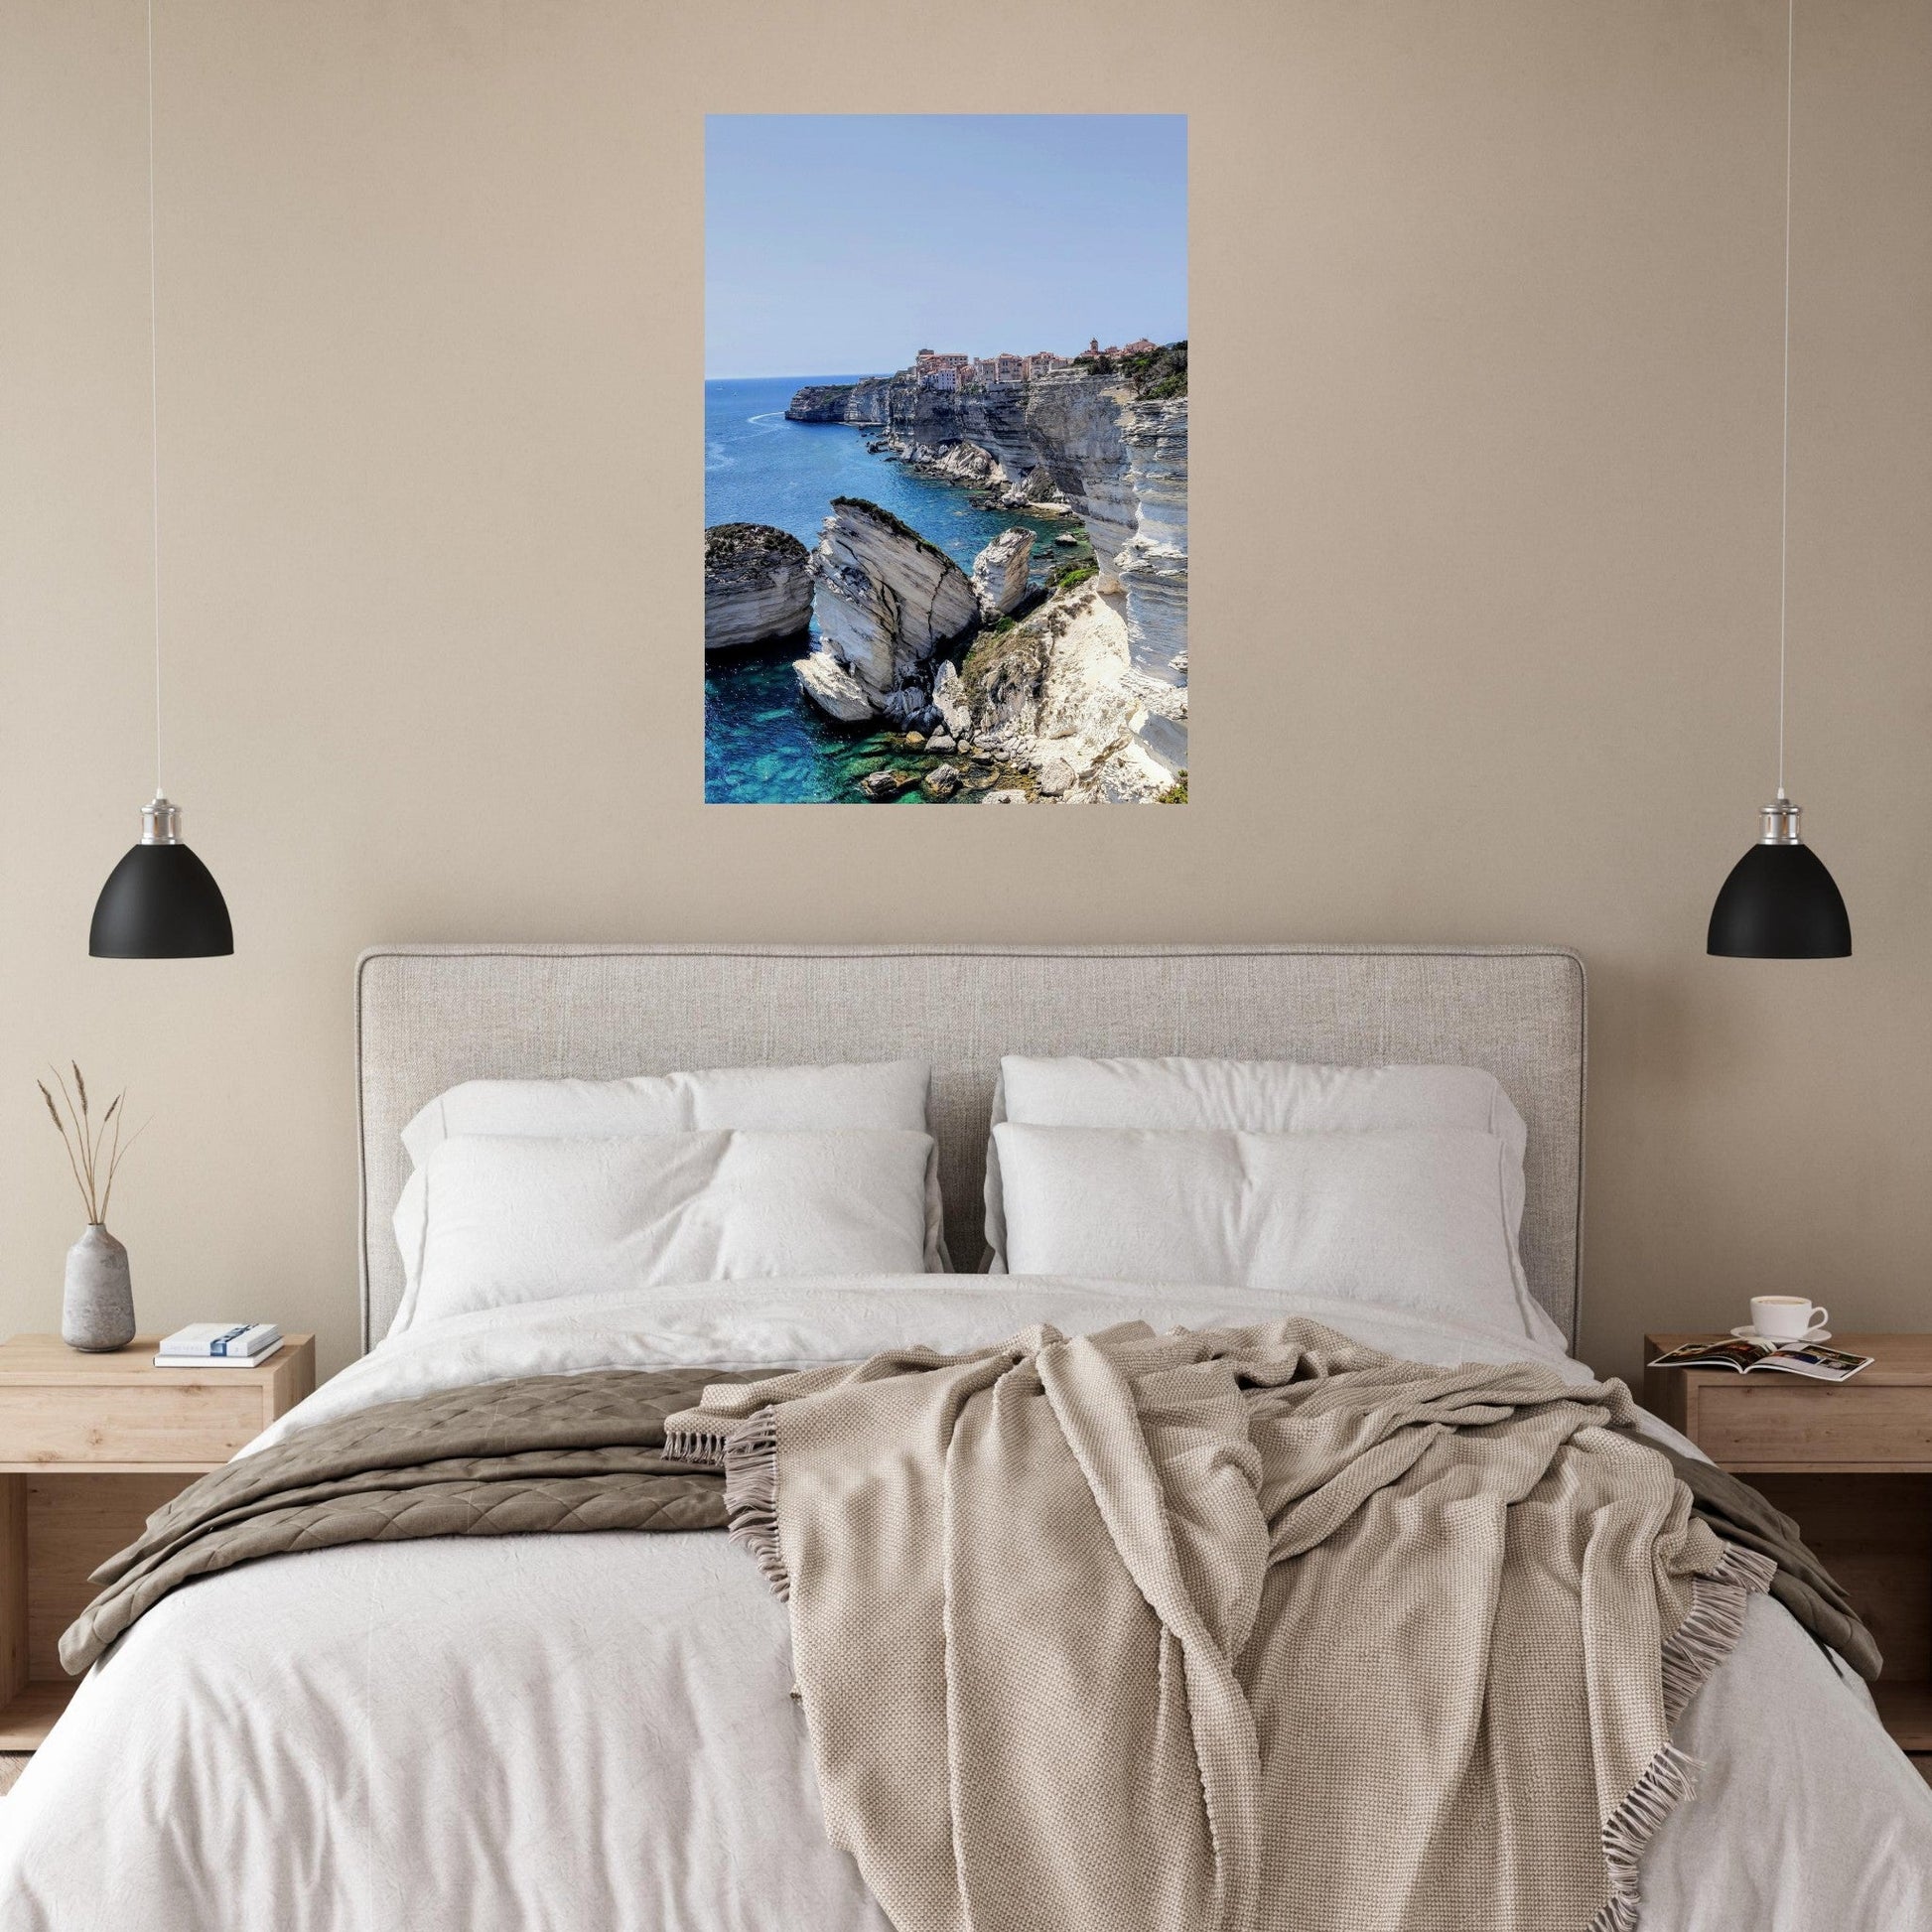 Vente Photo de Bonifacio, Corse #4 - Tableau photo paysage